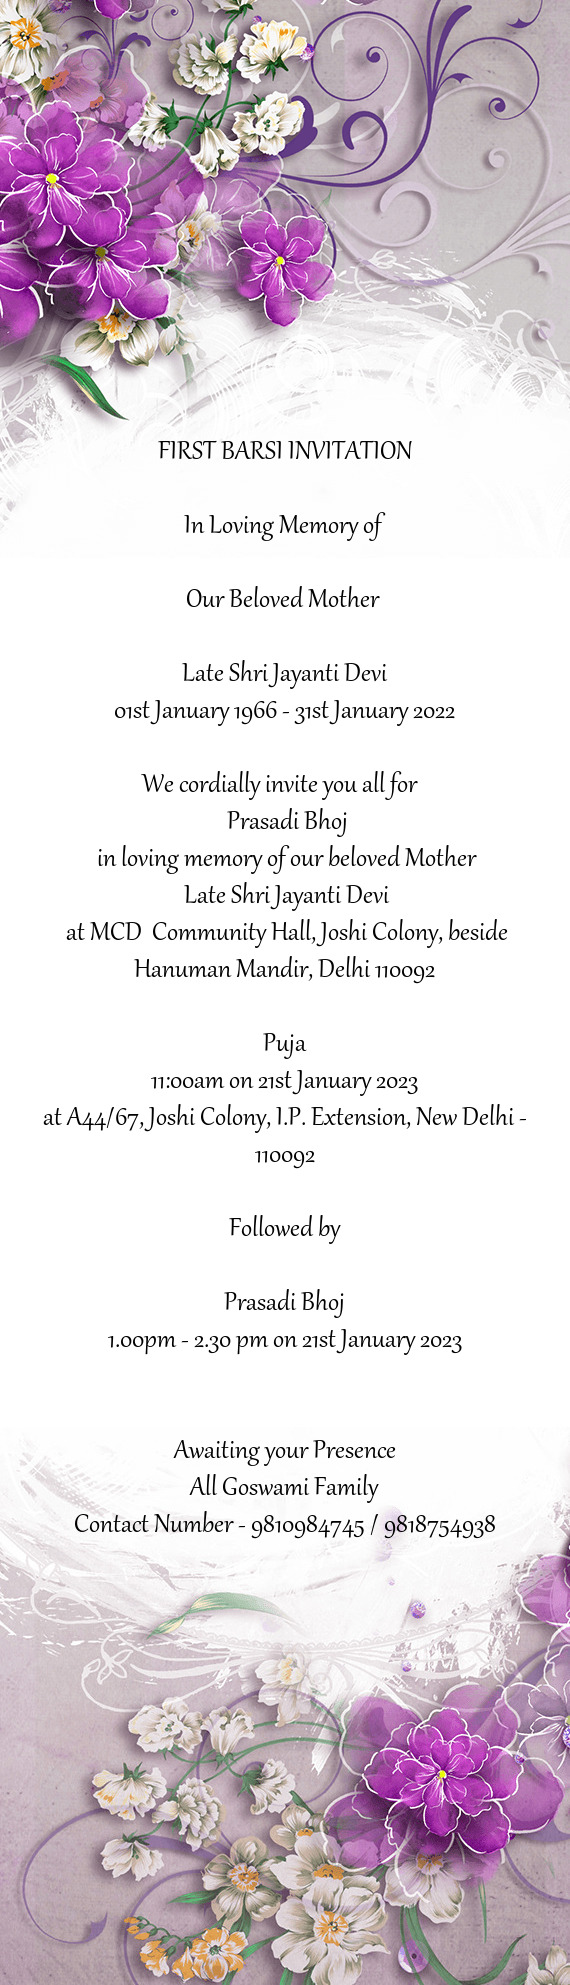 At MCD Community Hall, Joshi Colony, beside Hanuman Mandir, Delhi 110092